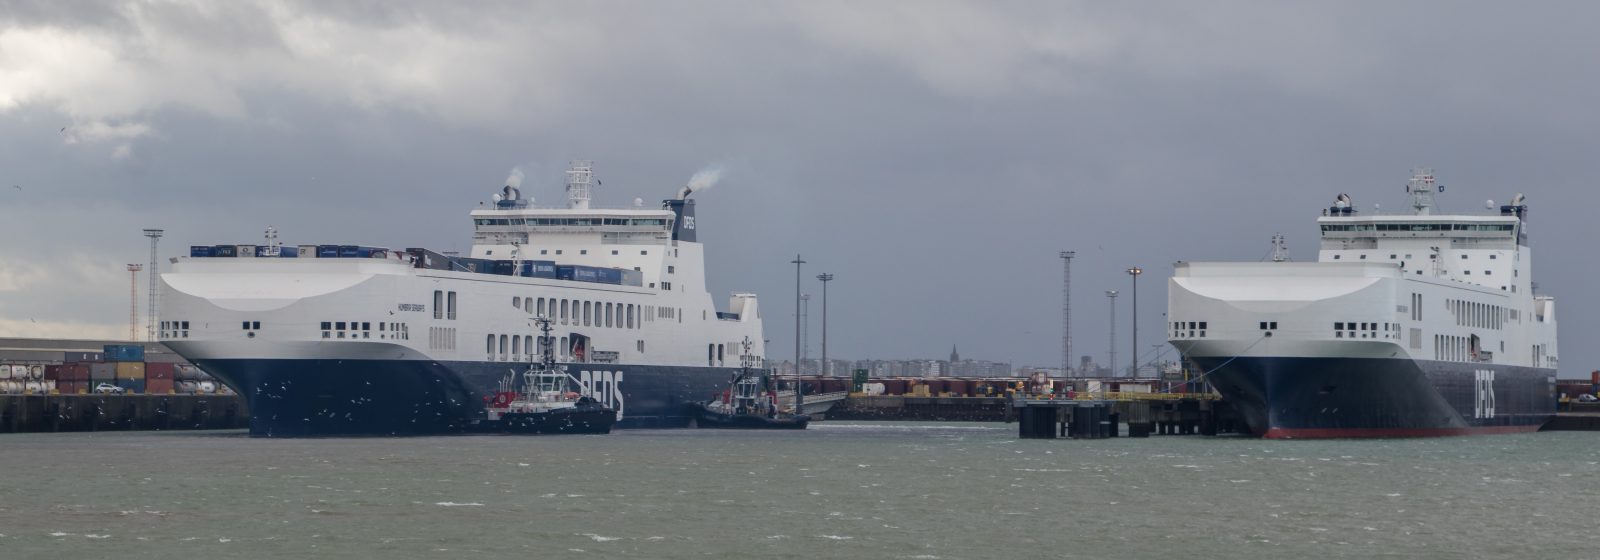 'Flandria Seaways' en 'Humbria Seaways' in Zeebrugge